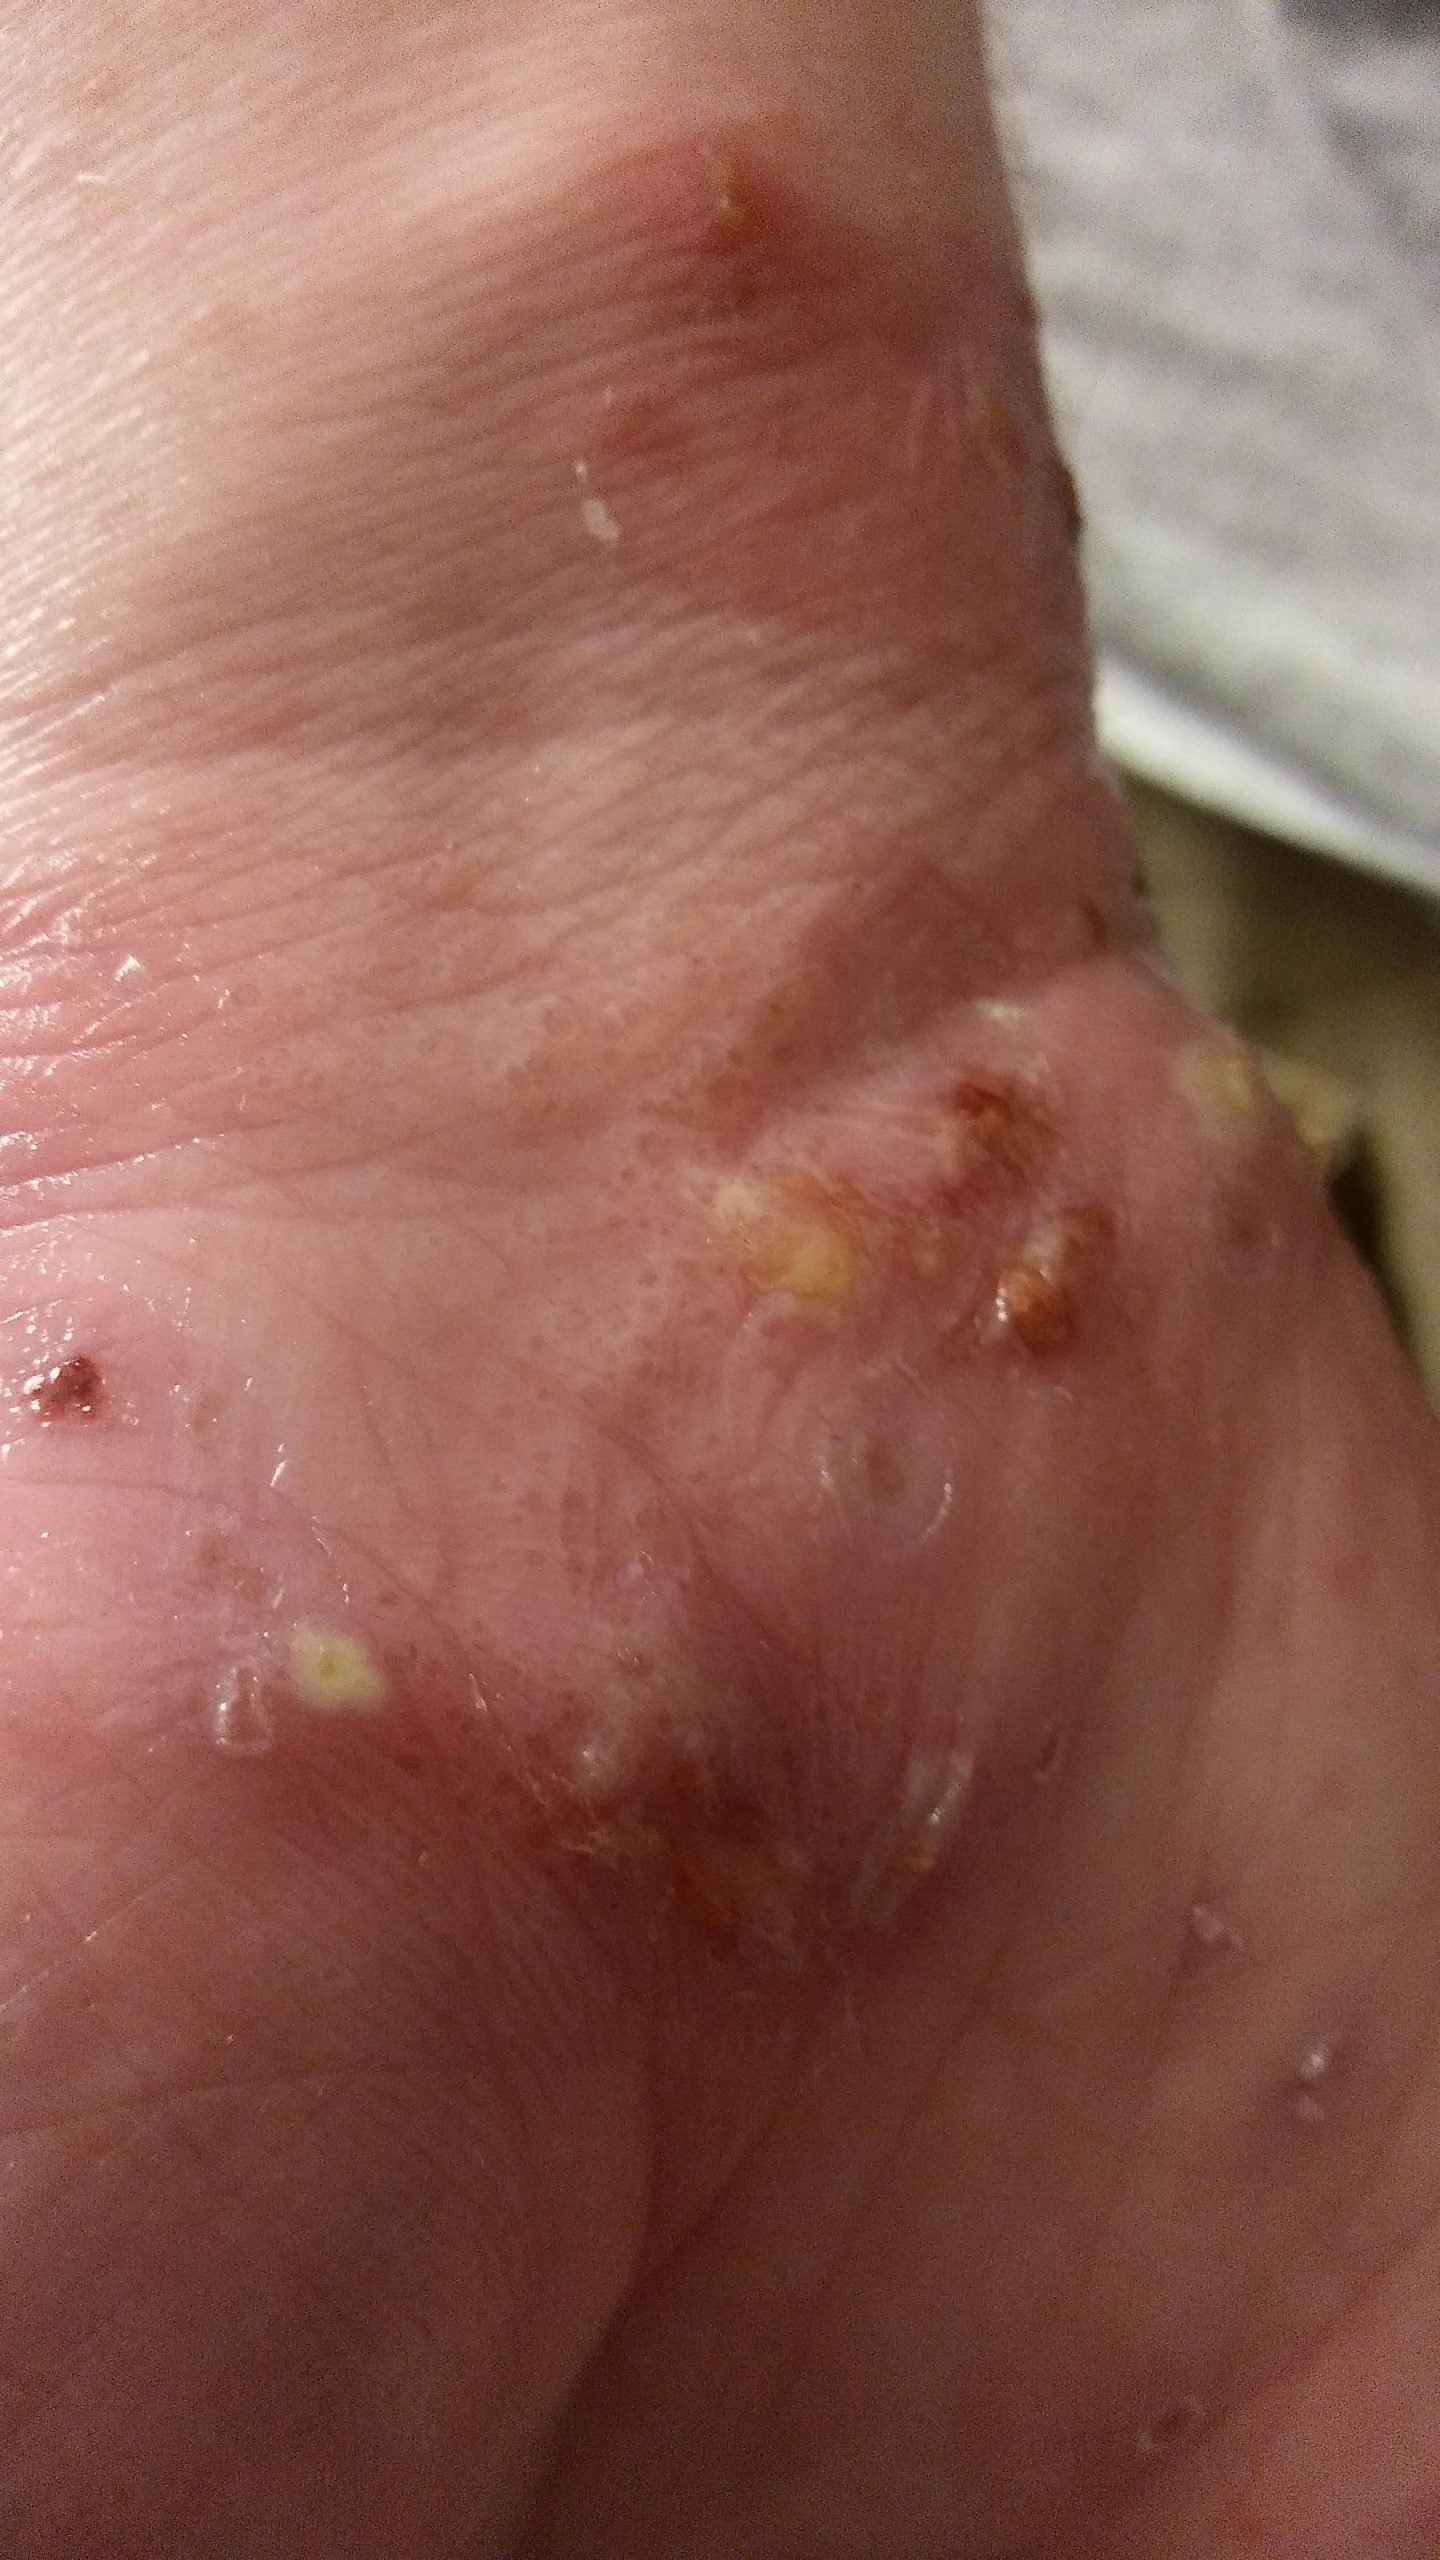 Infected dyshidrotic eczema : popping